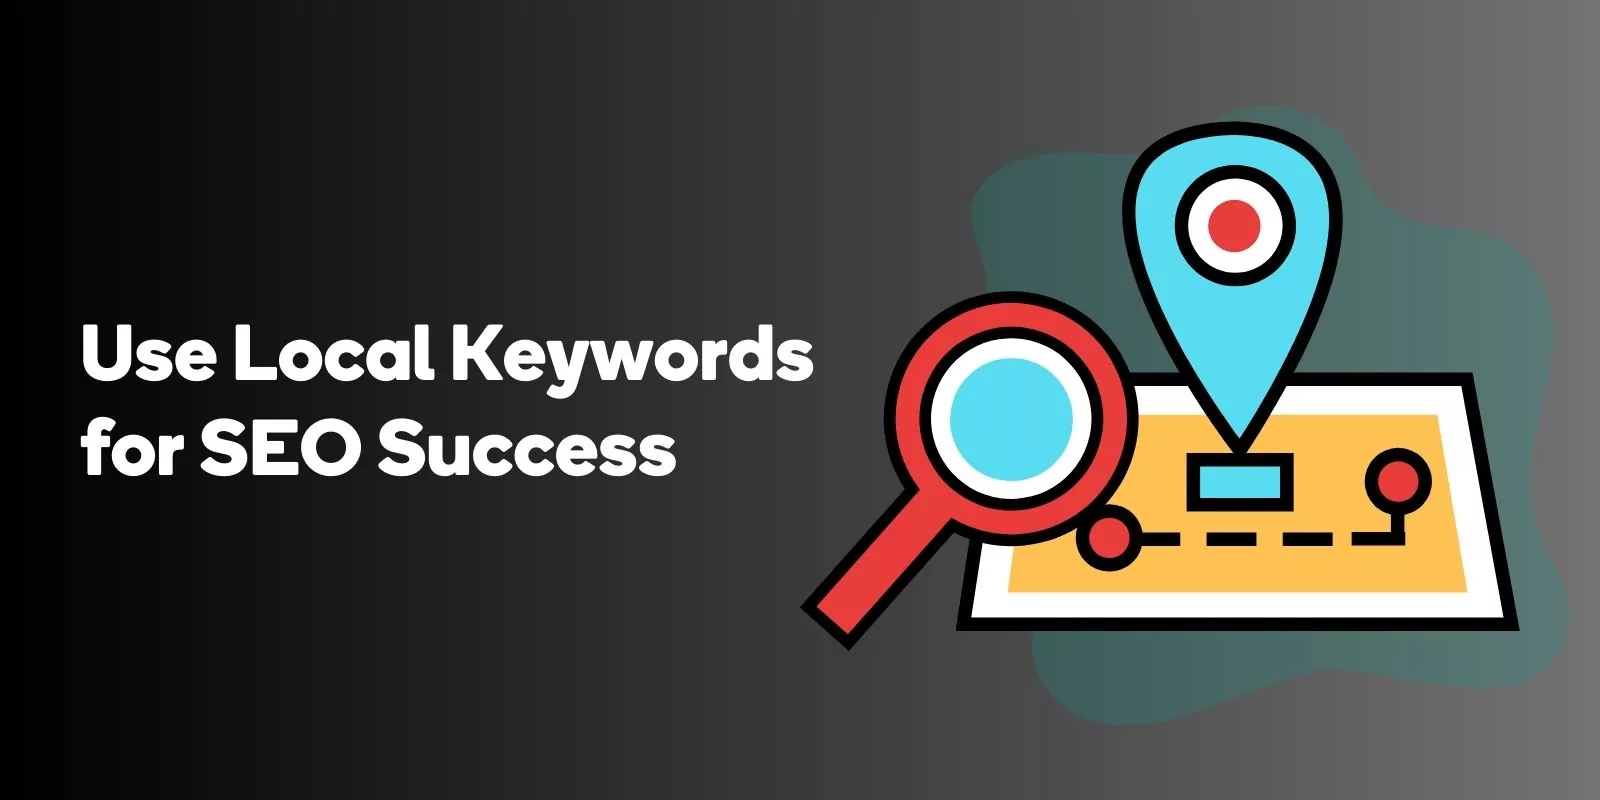 Use Local Keywords for SEO Success